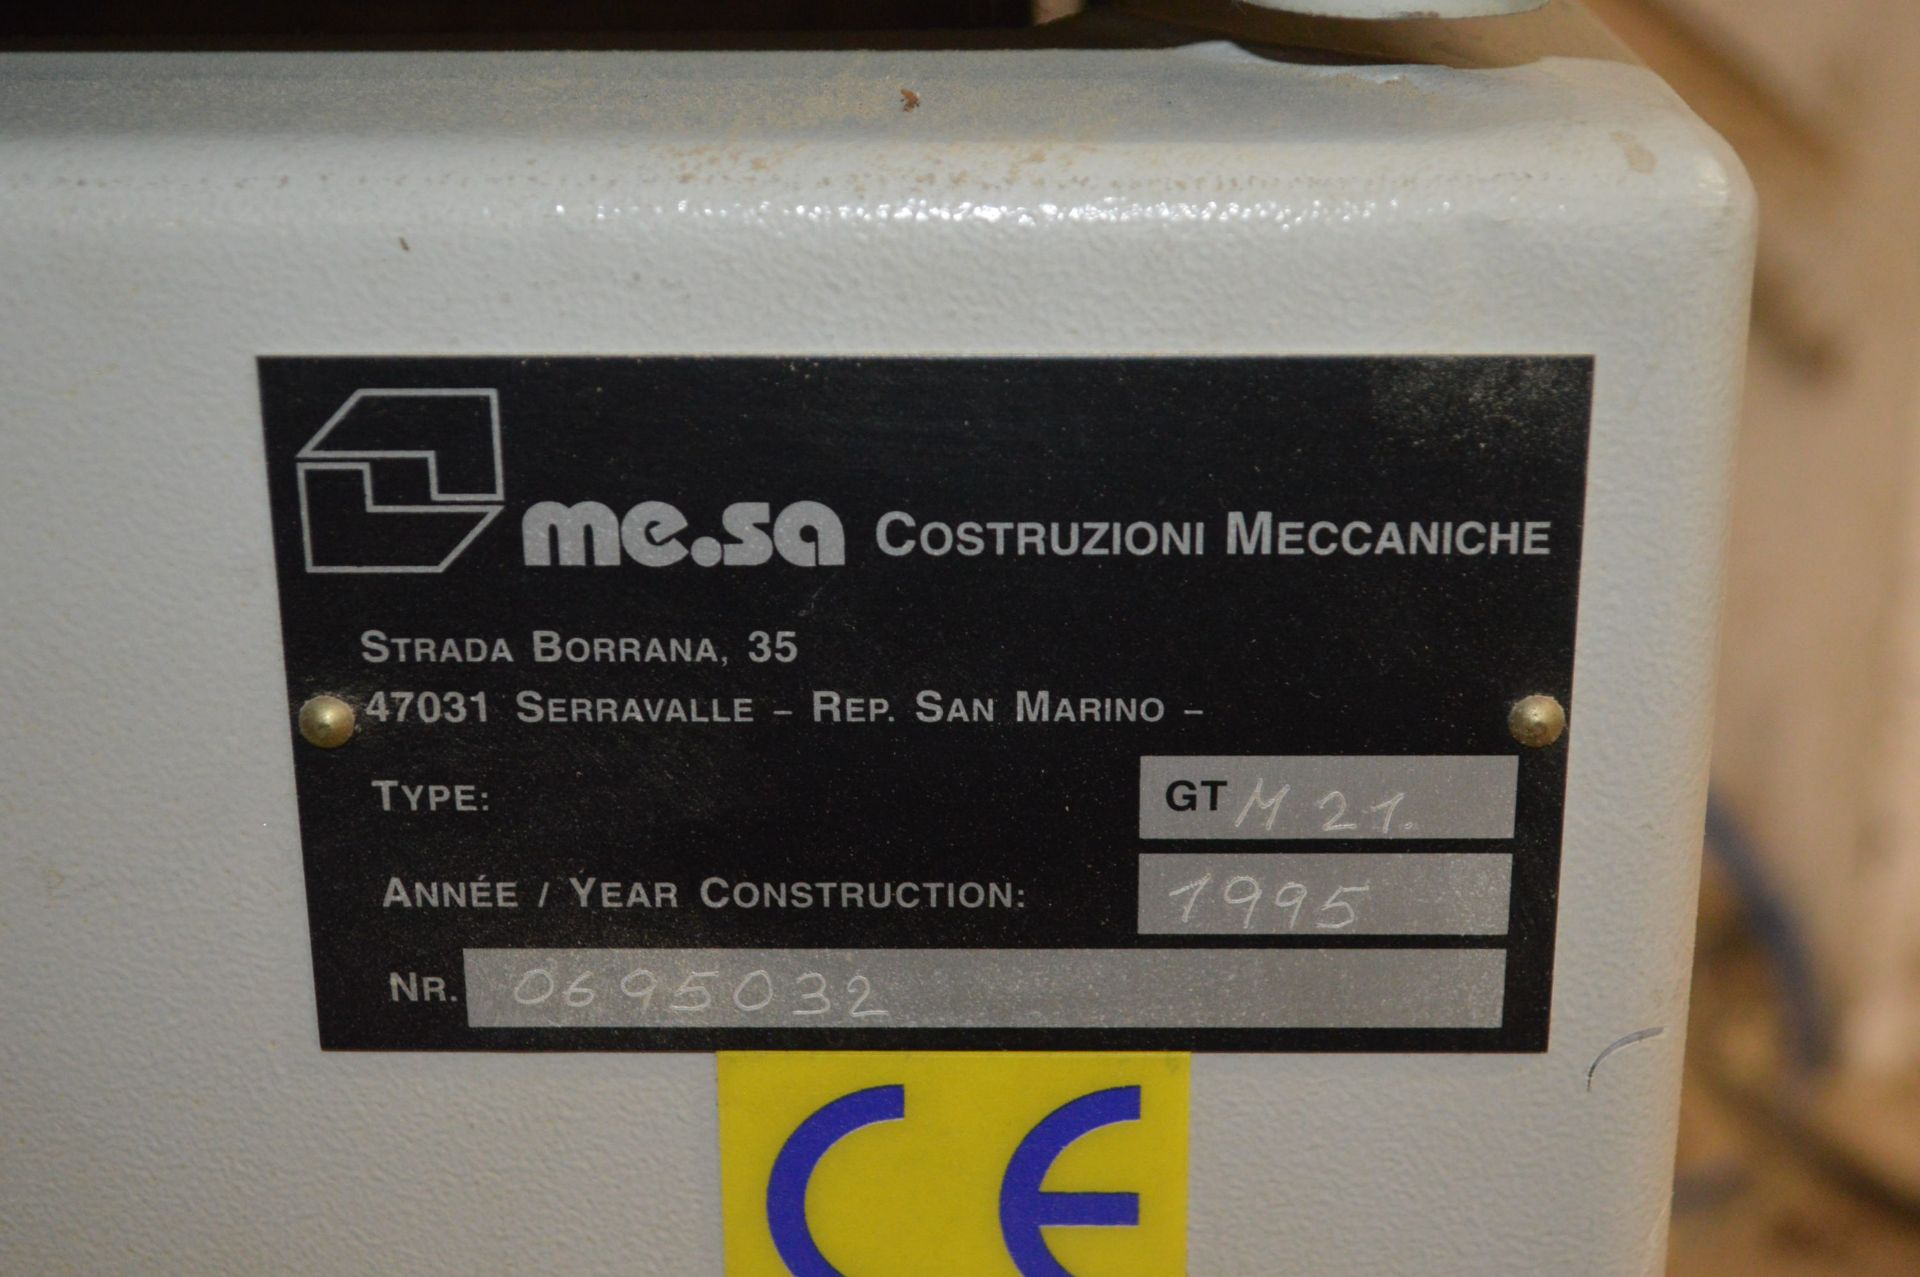 Me.Sa Type GT M21 Multi-Borer, serial no. 0695032, - Image 4 of 4